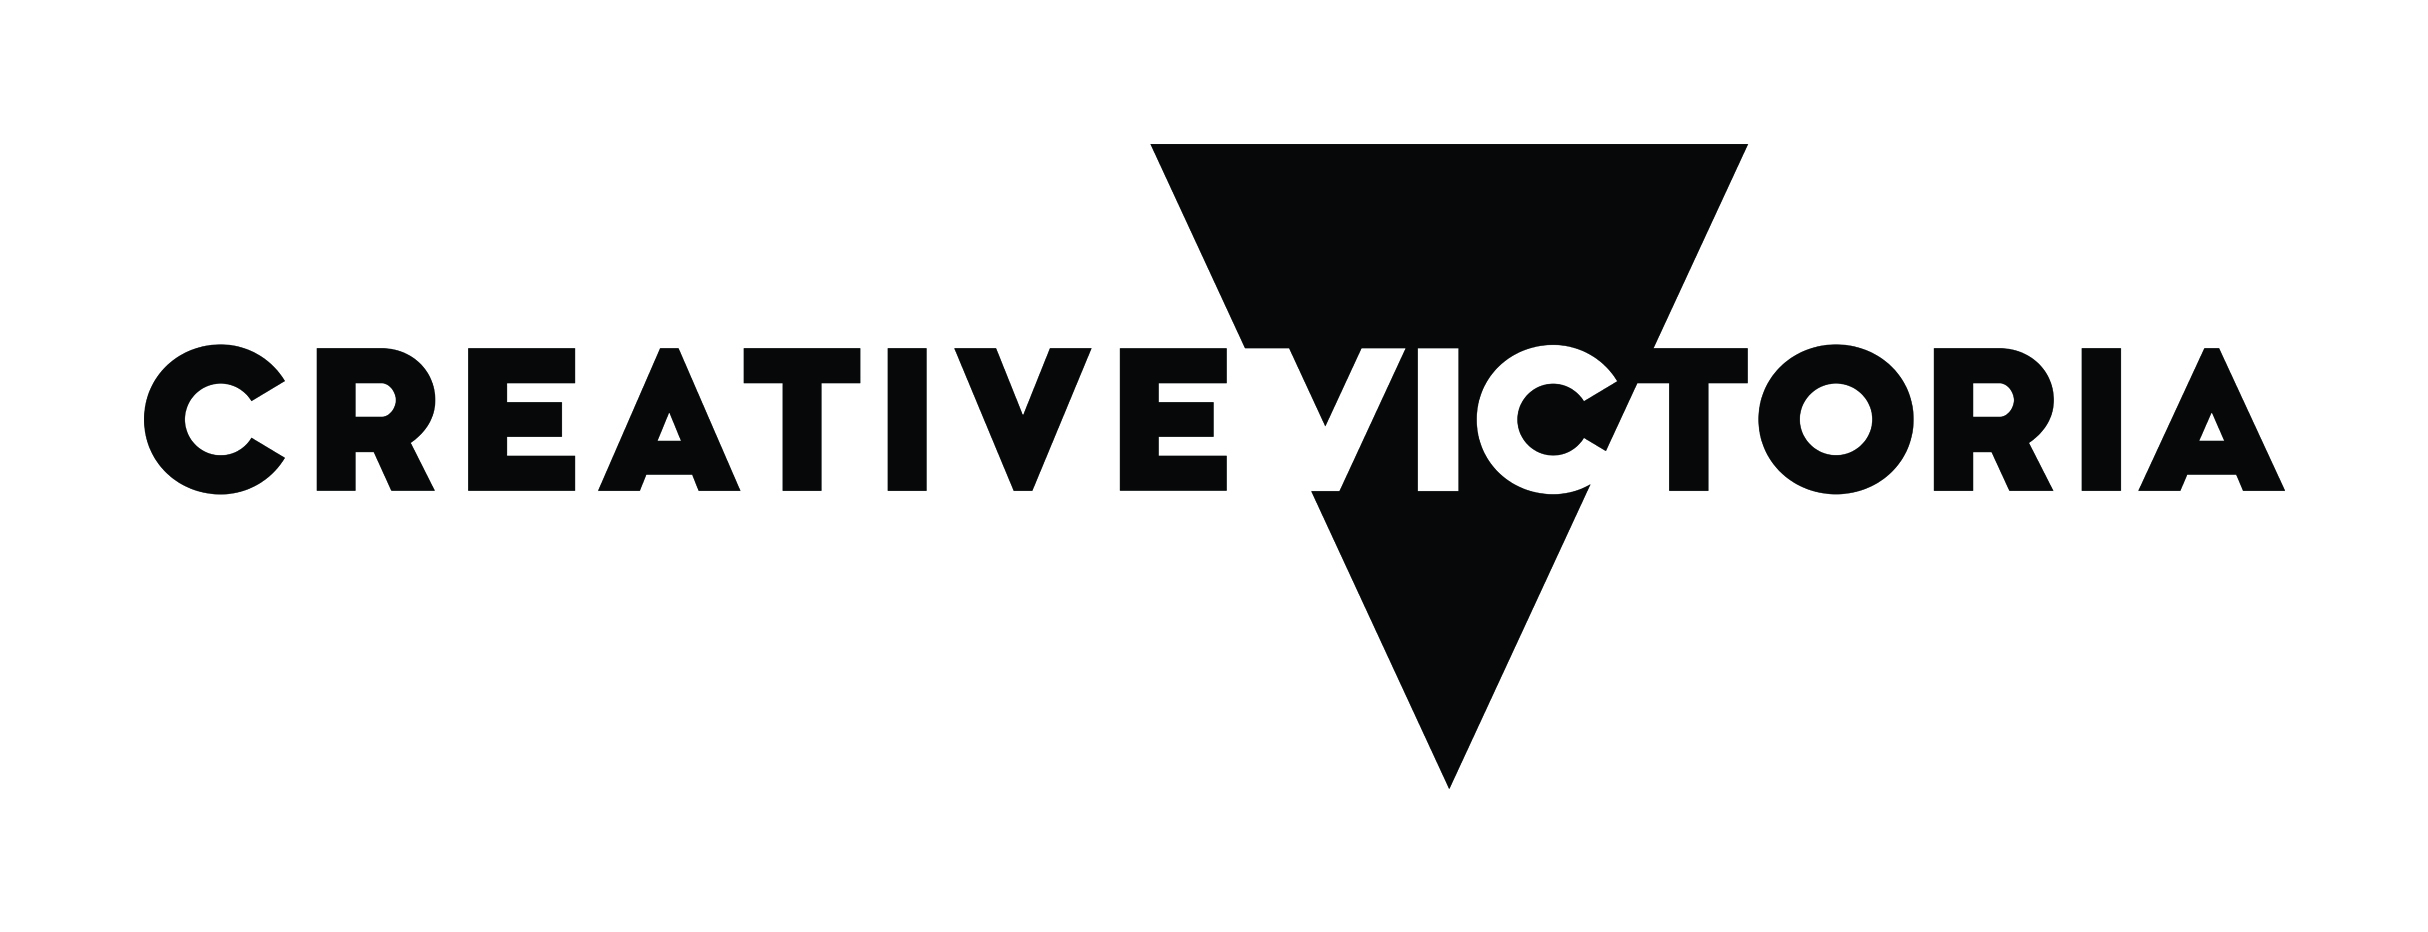 CreativeVictoria_logo-print-1.jpg